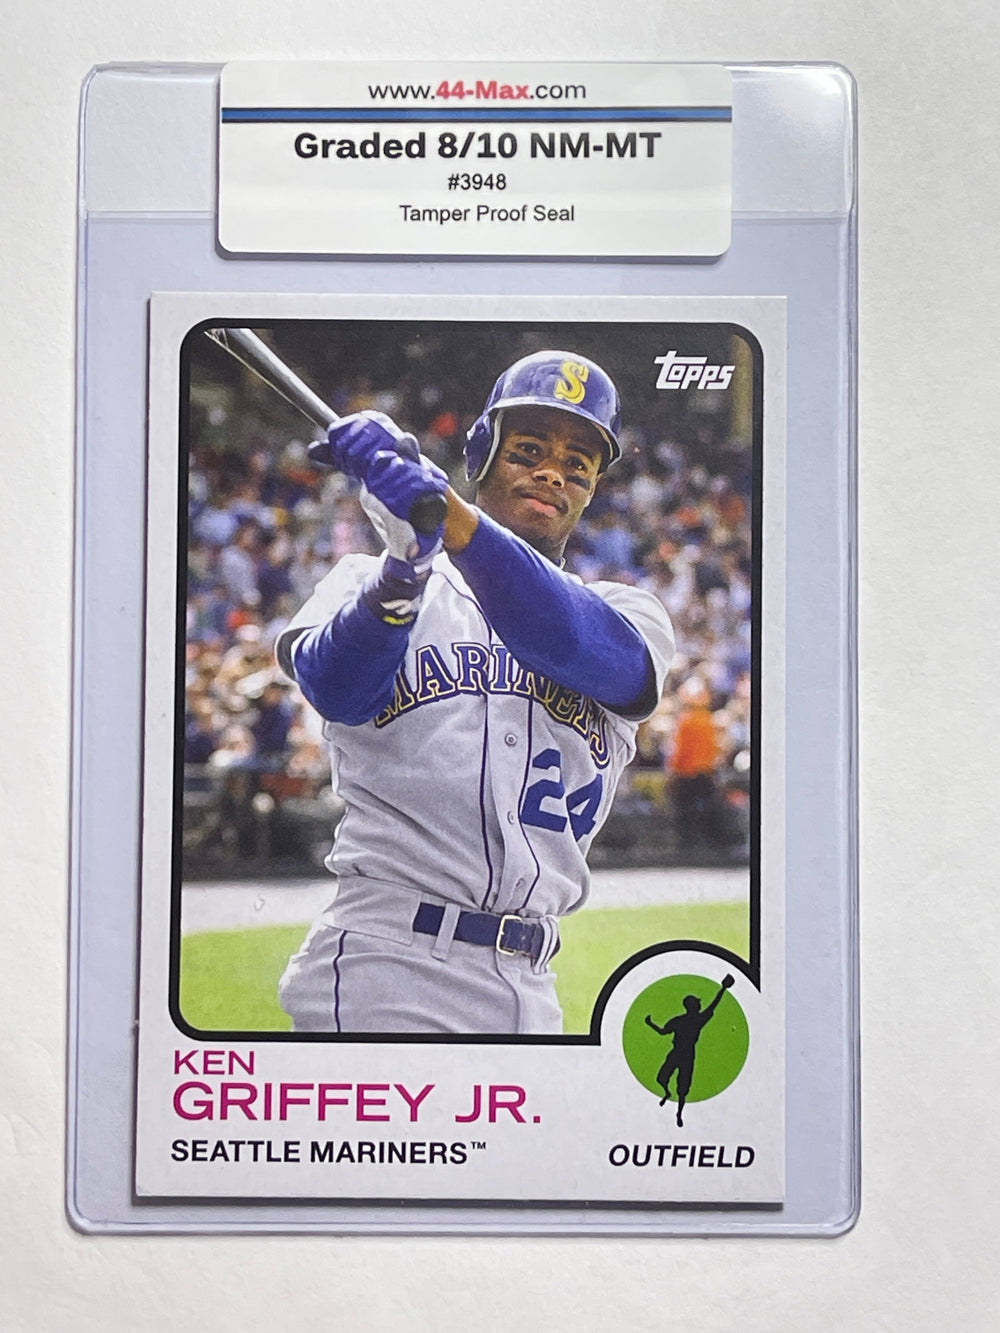 Ken Griffey Jr 2021 Topps Baseball Card. 44-Max 8/10 NM-MT #3948